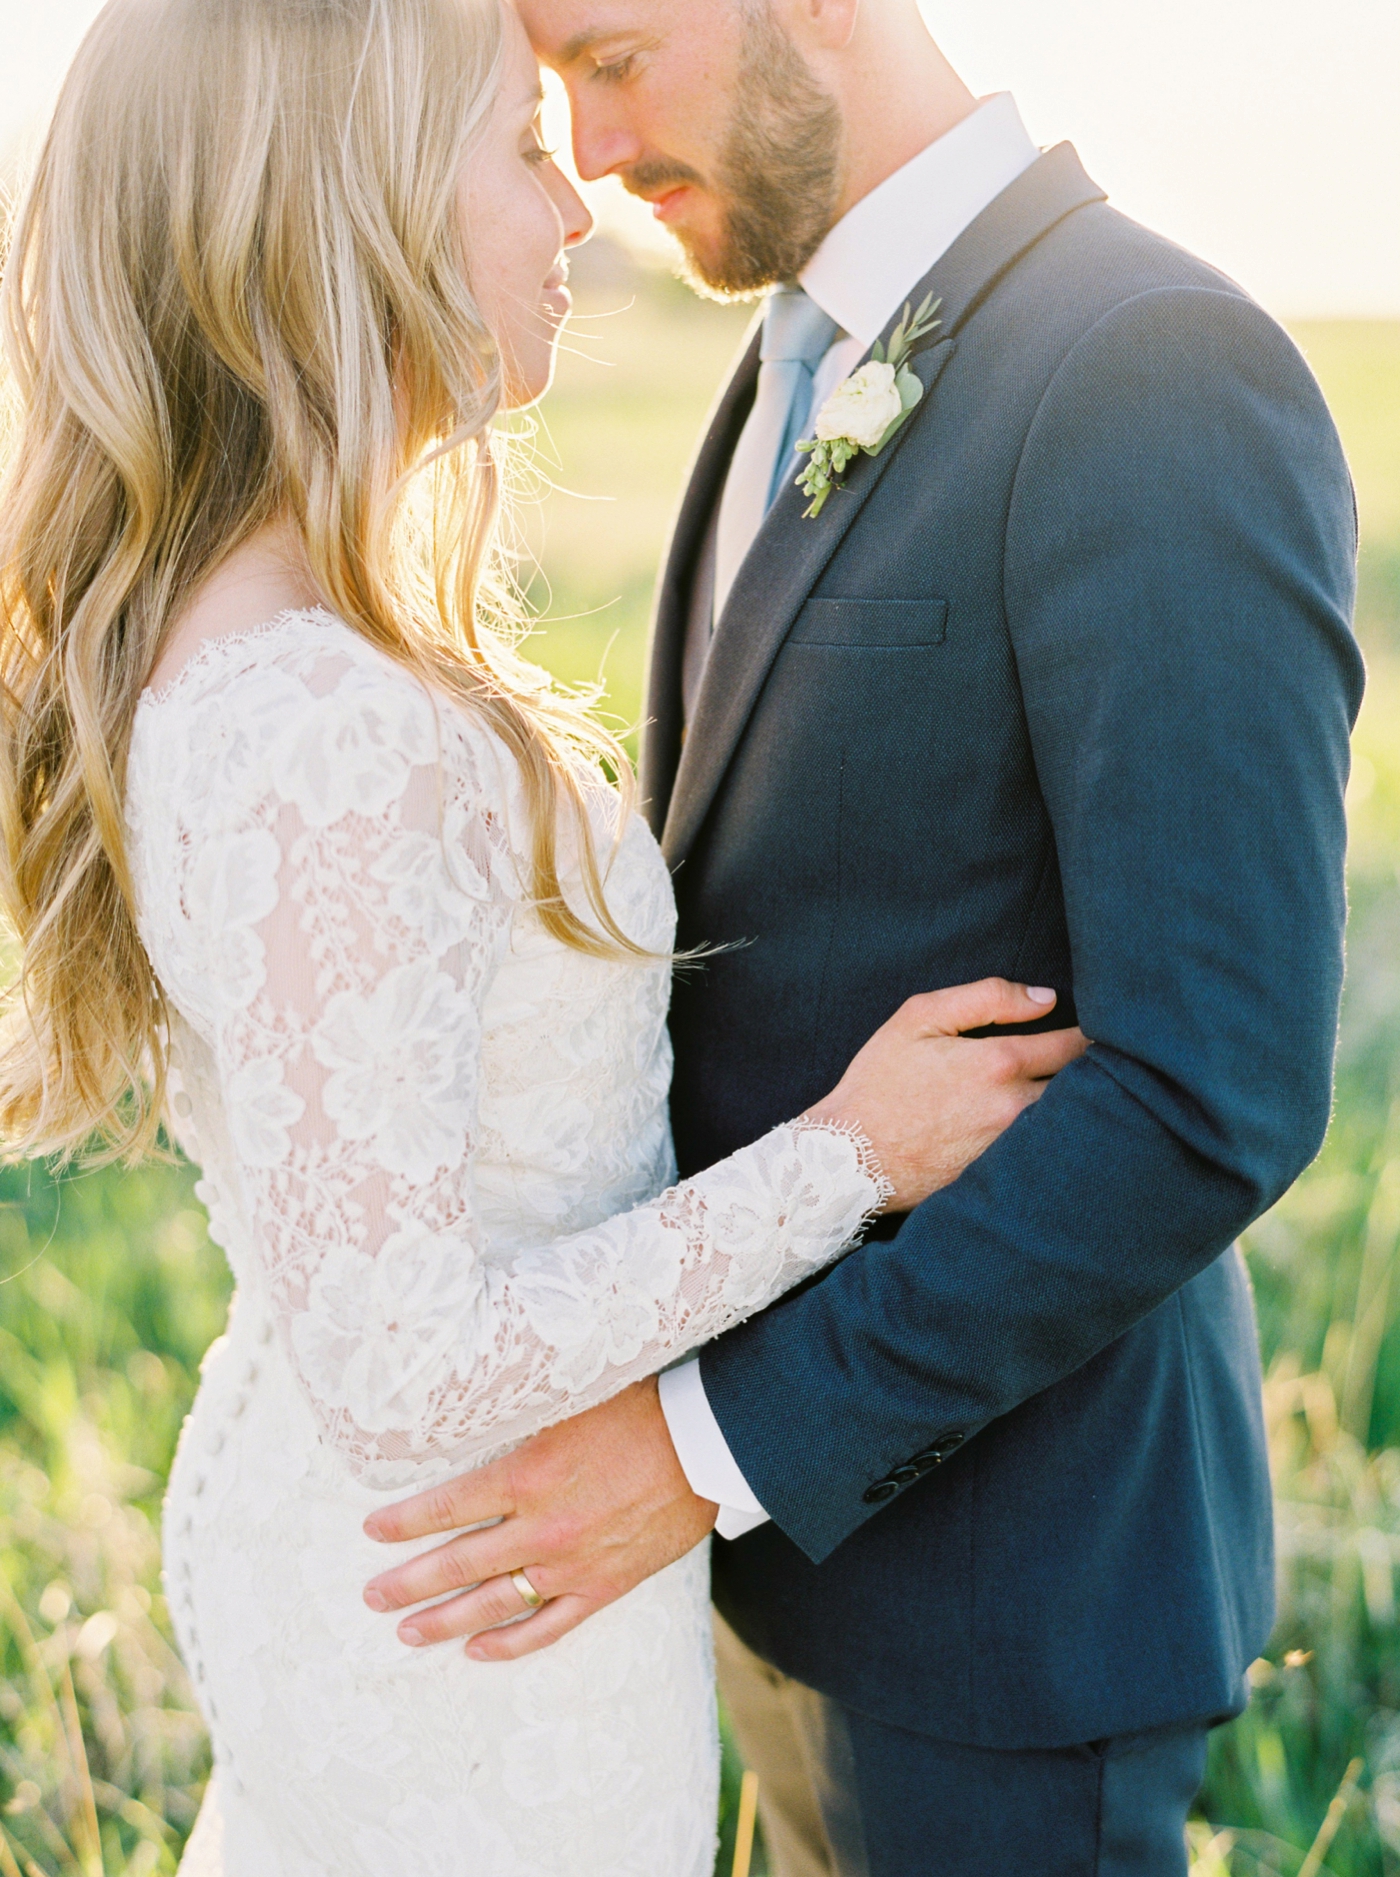 Calgary wedding photographers | The Gathered Farm Wedding | Justine milton fine art film photographer | sunset farm bride and groom portraits